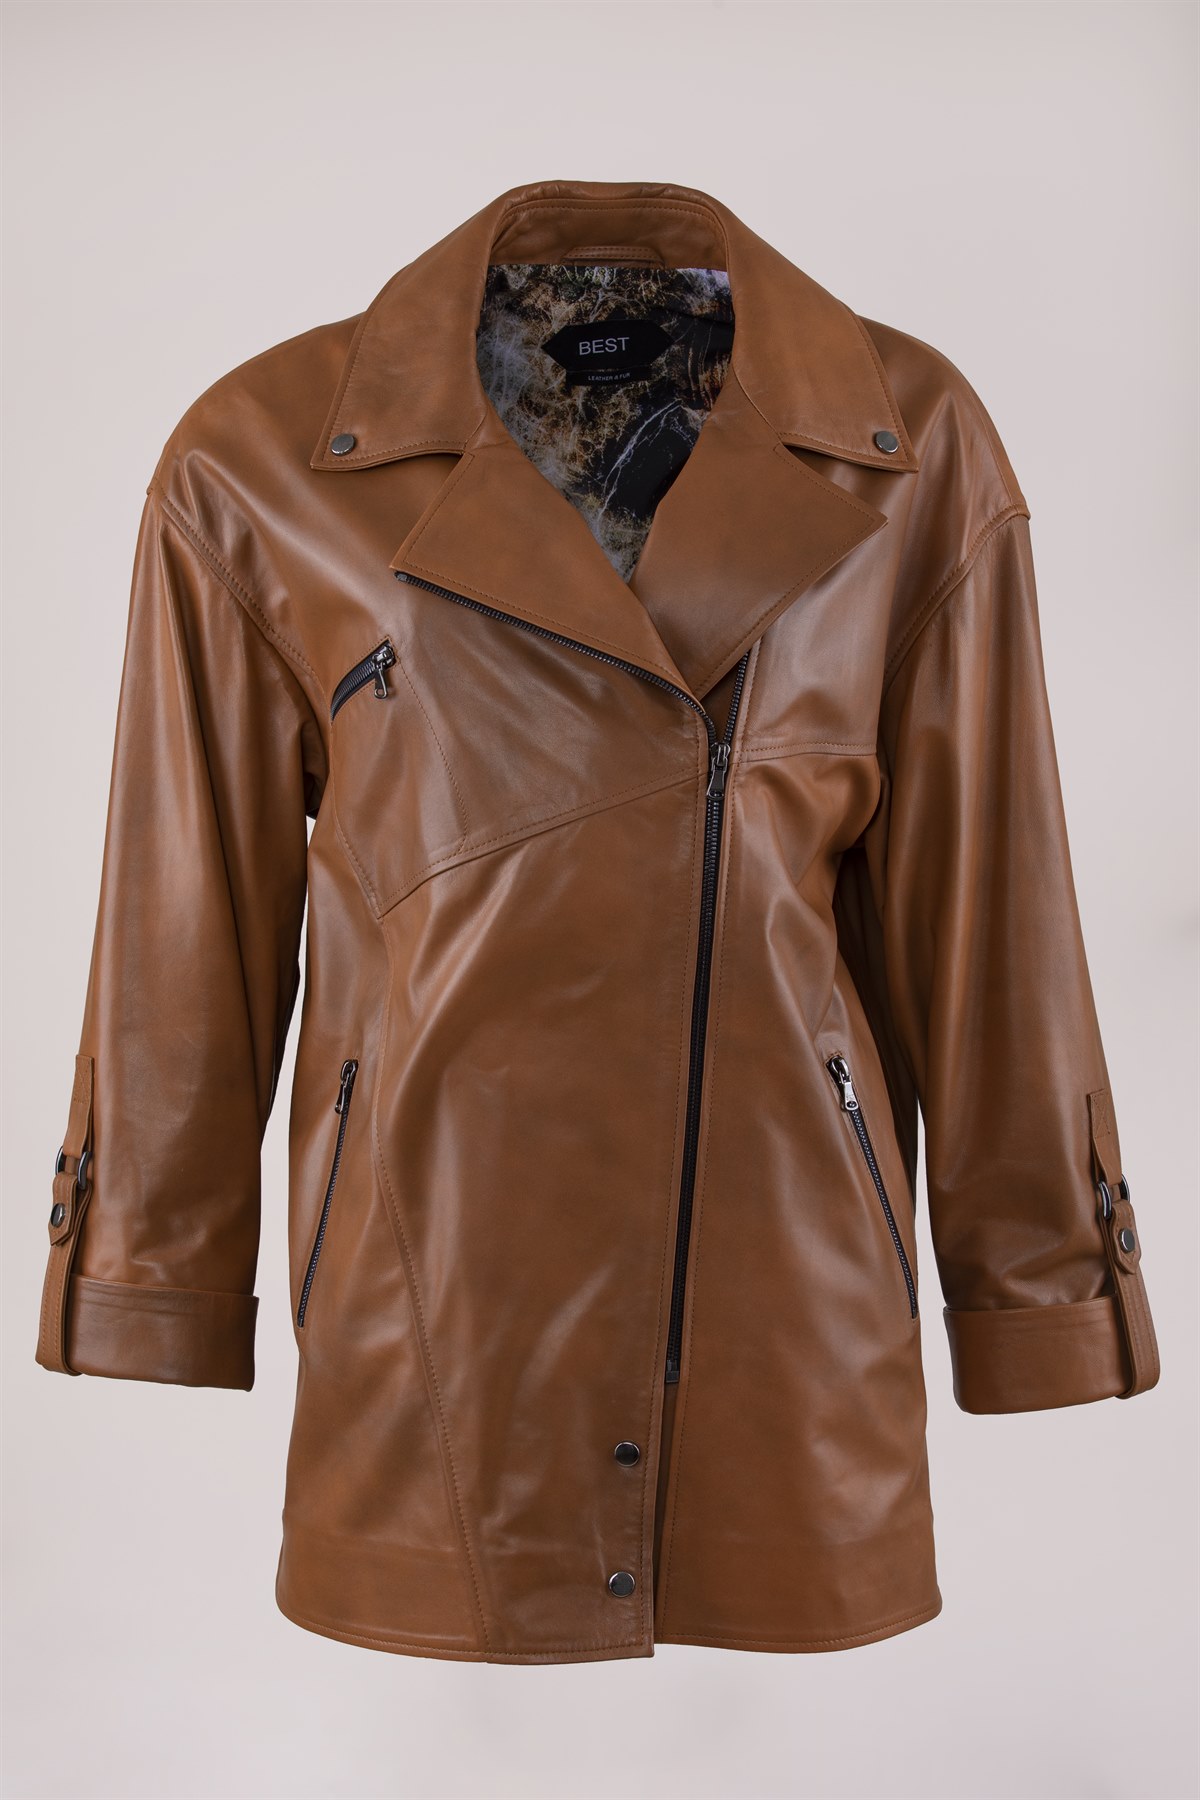 Picture of BestDeri female whiskey leather jacket